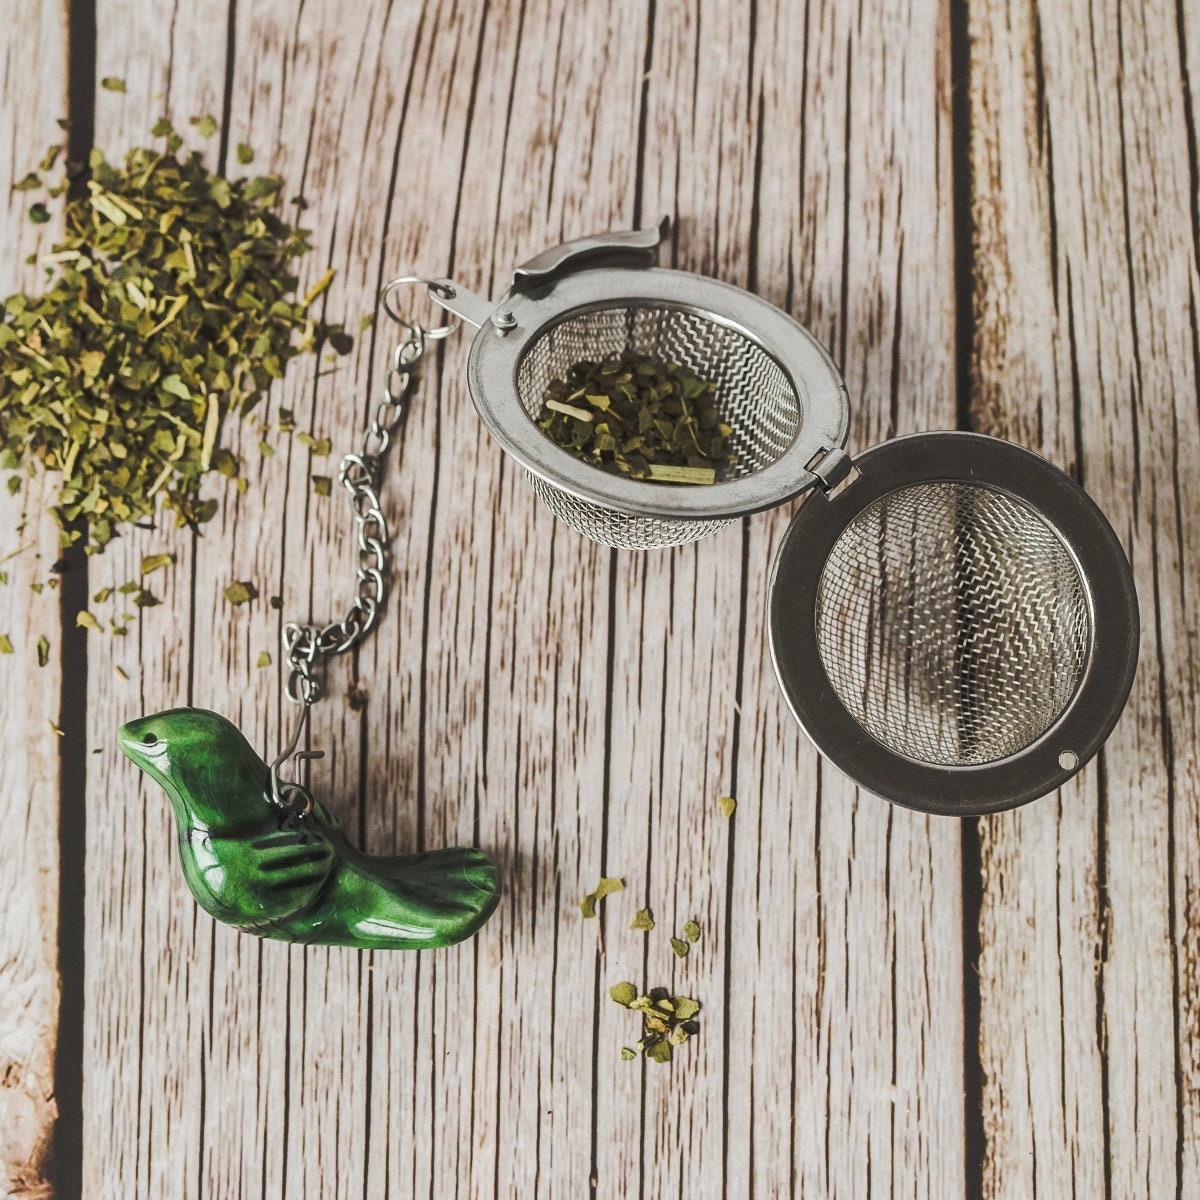 Loose leaf tea strainer with green ceramic bird - Tea infuser with bird charm - Herbal tea steeper - Christmas gift